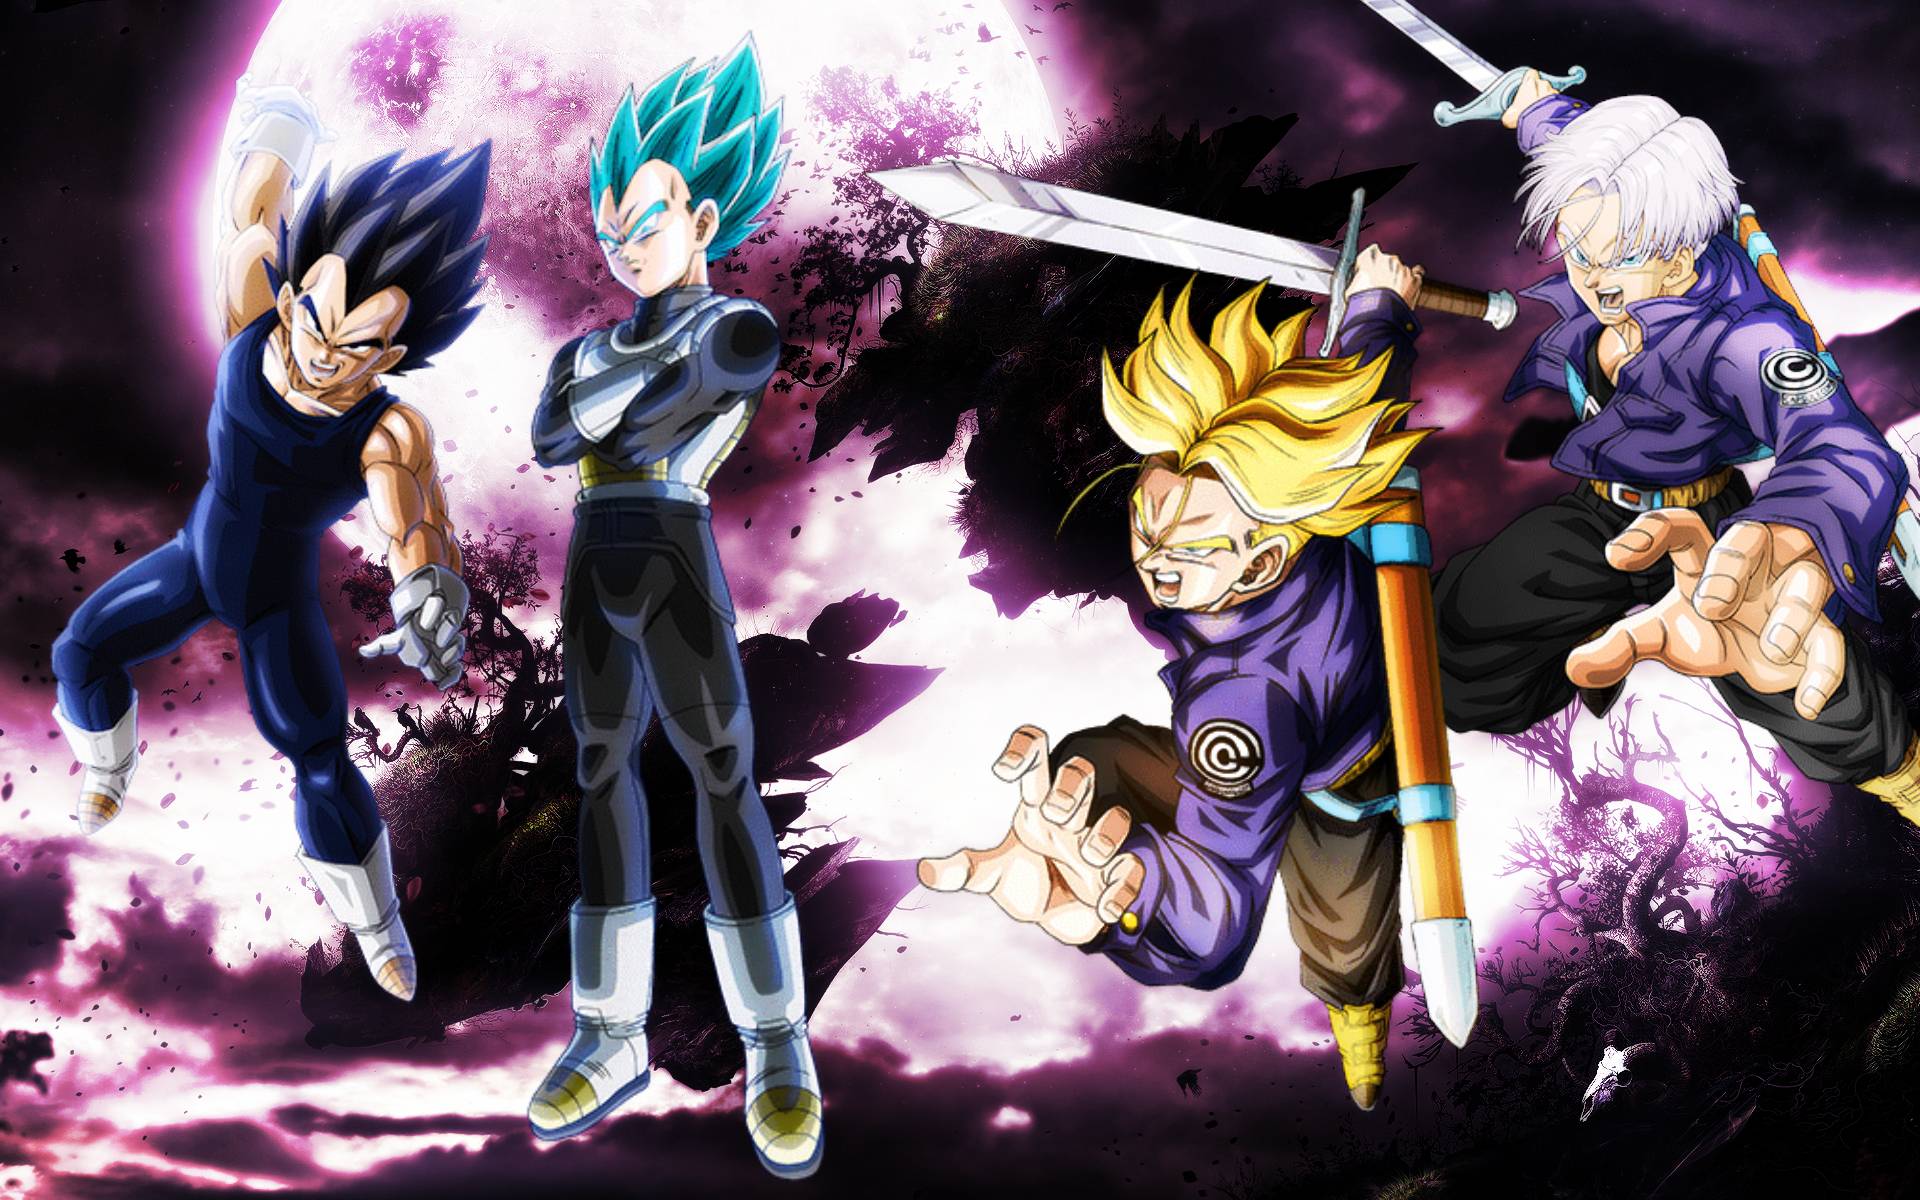 Dragon Ball Z, Goku, Gohan, Vegeta, Trunks 4K wallpaper download